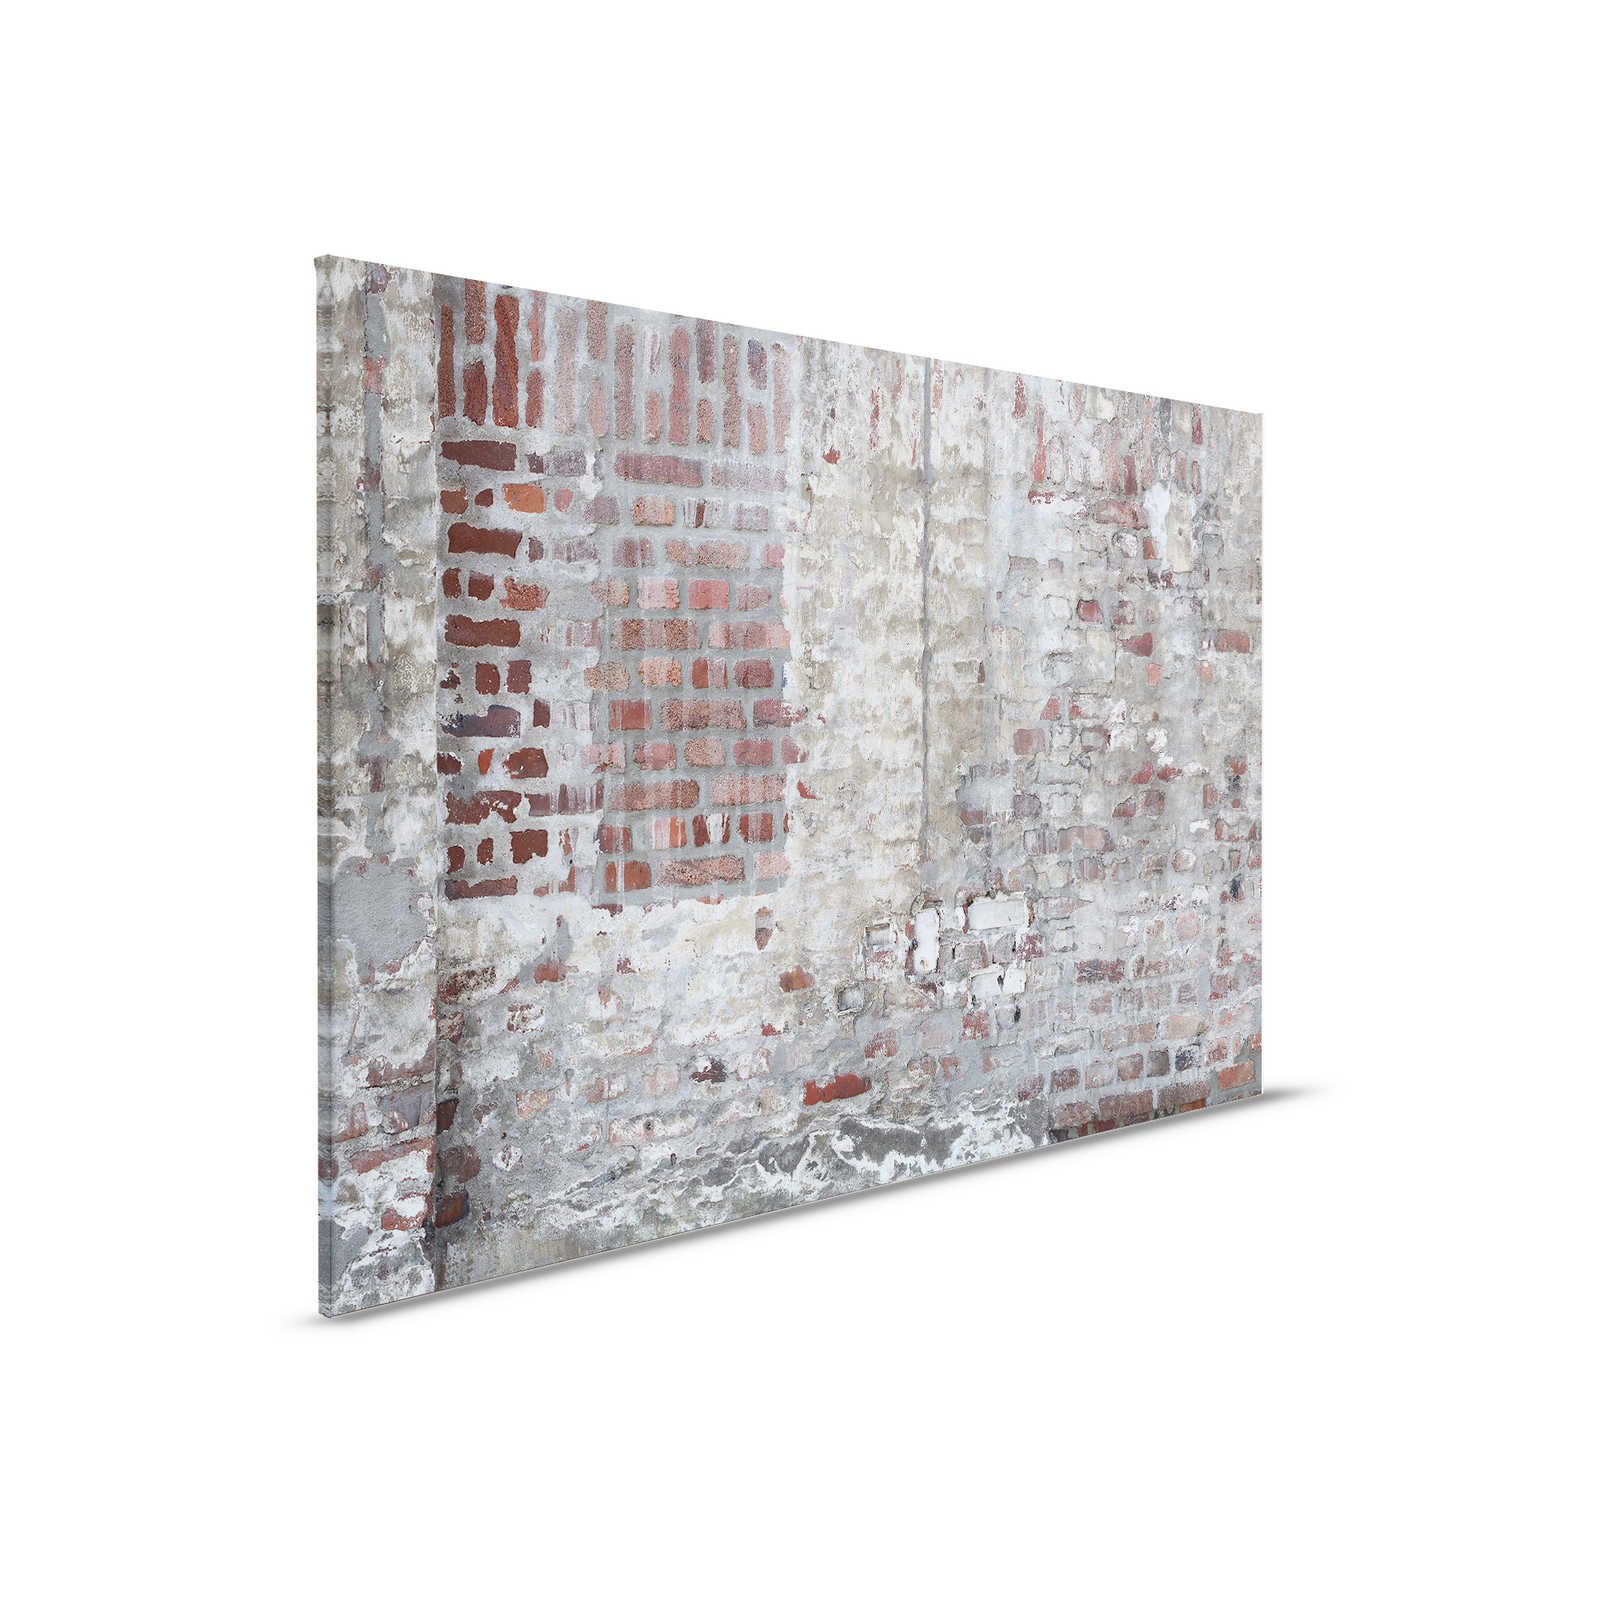         Canvas painting Brickwork & Plaster Optics in Used Design - 0.90 m x 0.60 m
    